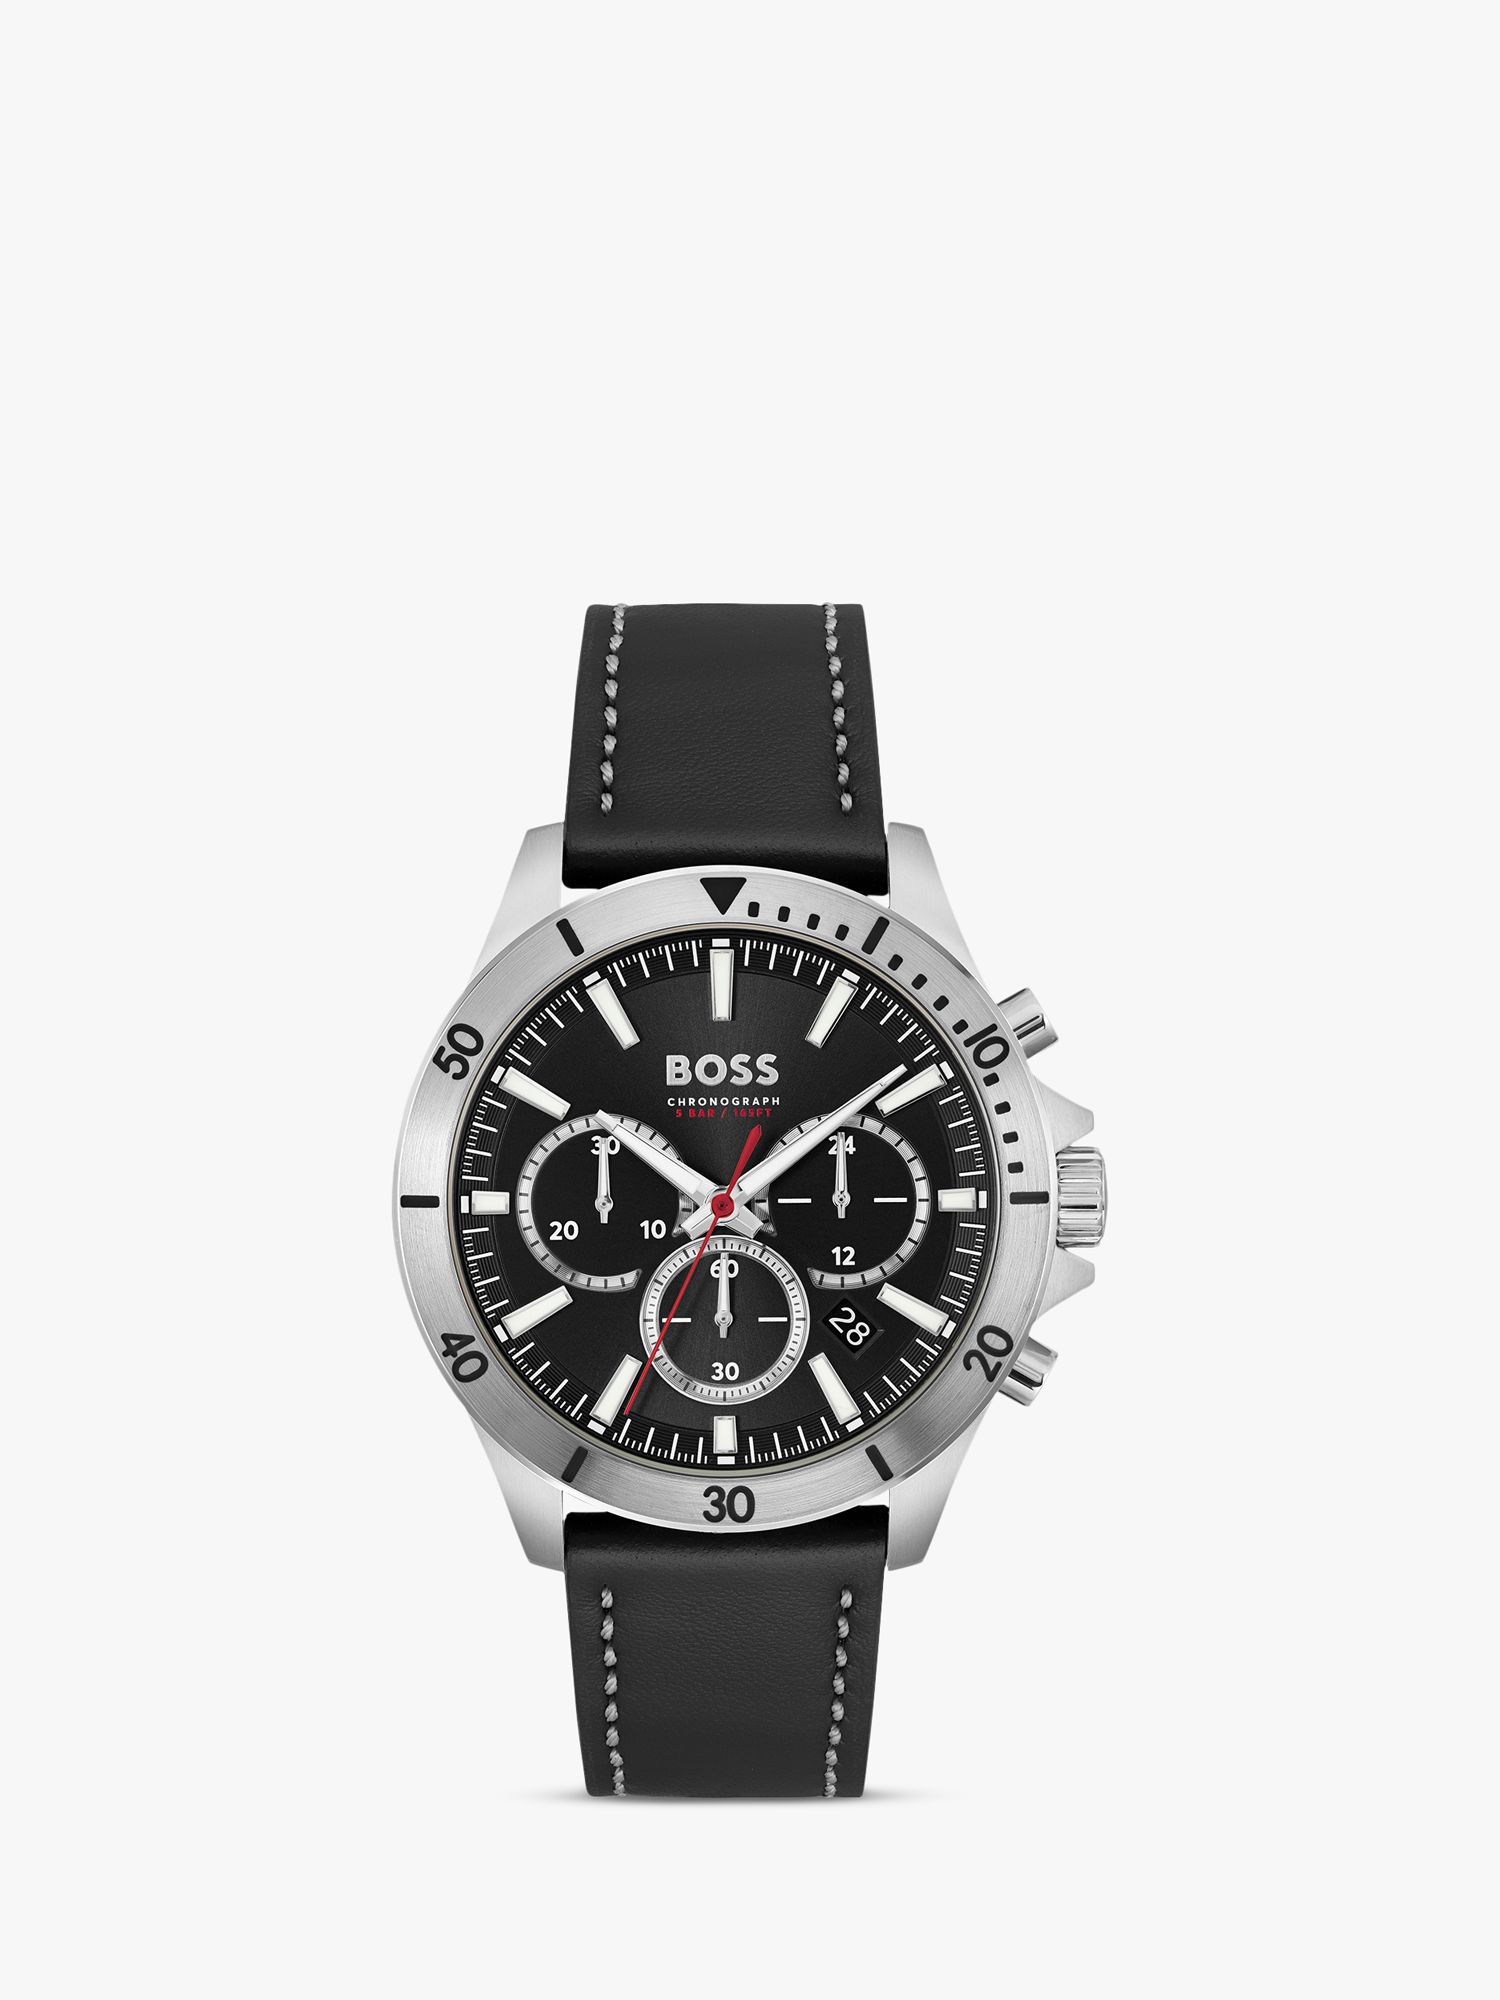 Buy BOSS Men's Troper Chronograph Leather Strap Watch, Black 1514055 Online at johnlewis.com